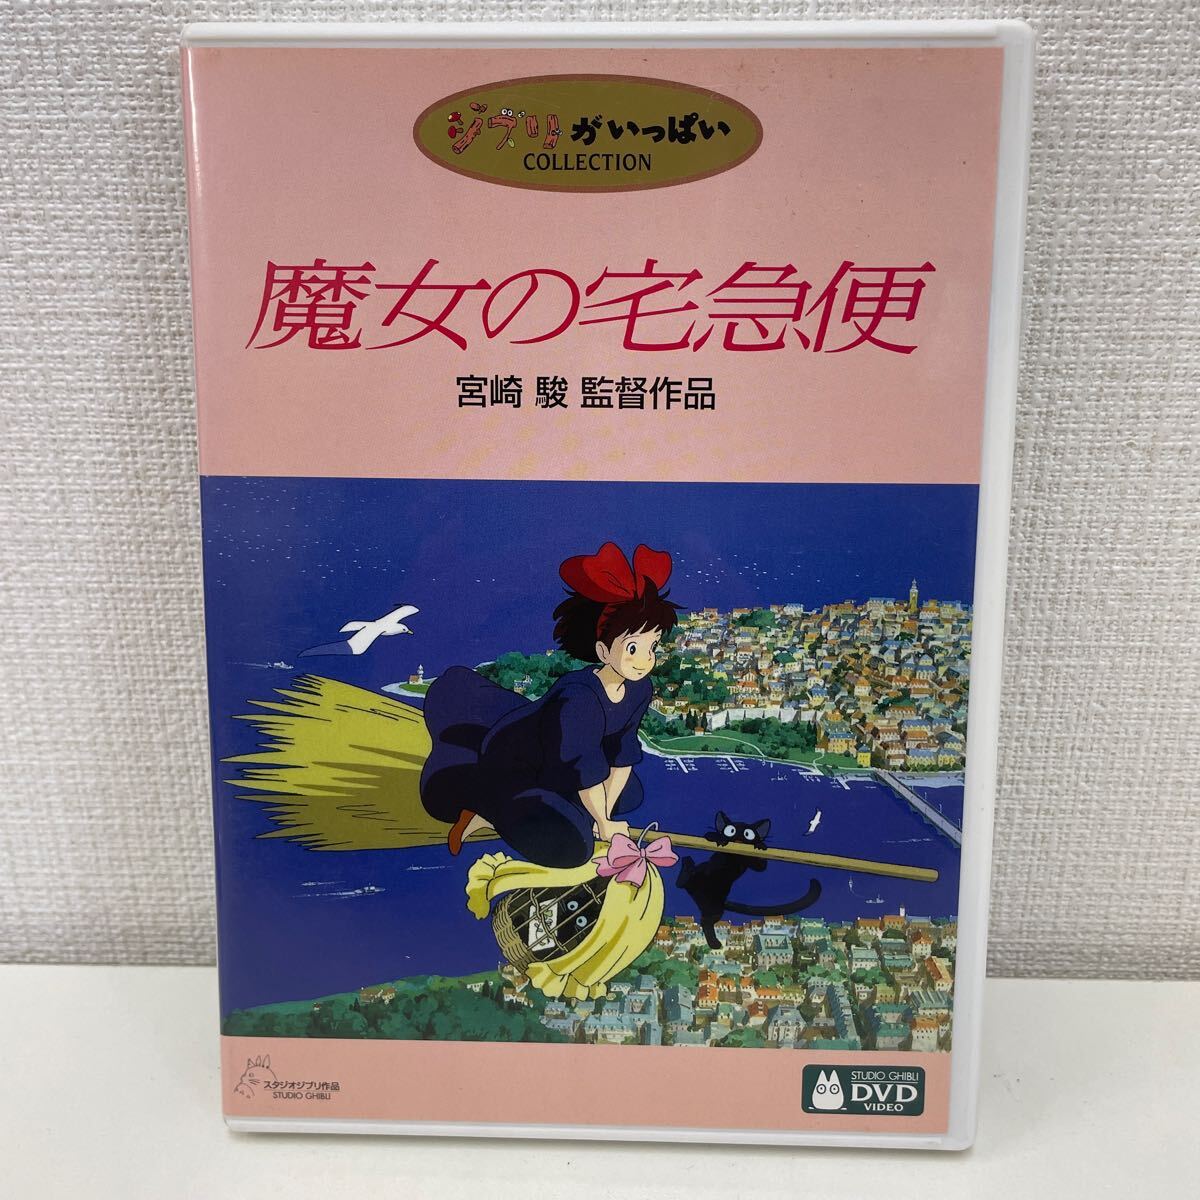 [1 jpy start ] Majo no Takkyubin DVD2 sheets set Studio Ghibli Miyazaki . thousand . thousand .. god .. appreciation discount ticket attaching 